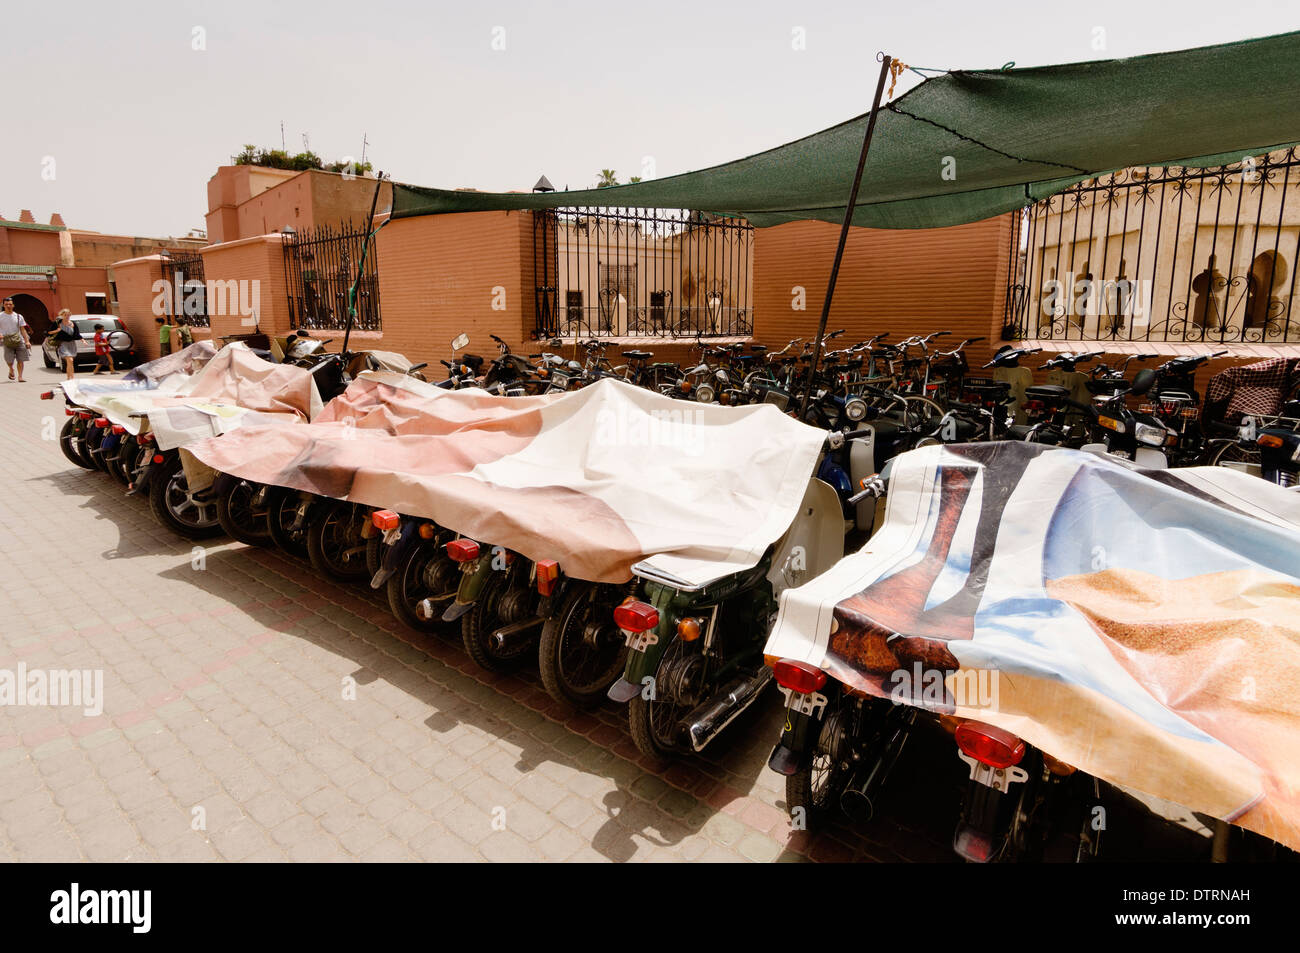 Motorbikes parked in Place de La Kissariat Ben Youssef in Marrakesh, Morocco. Stock Photo